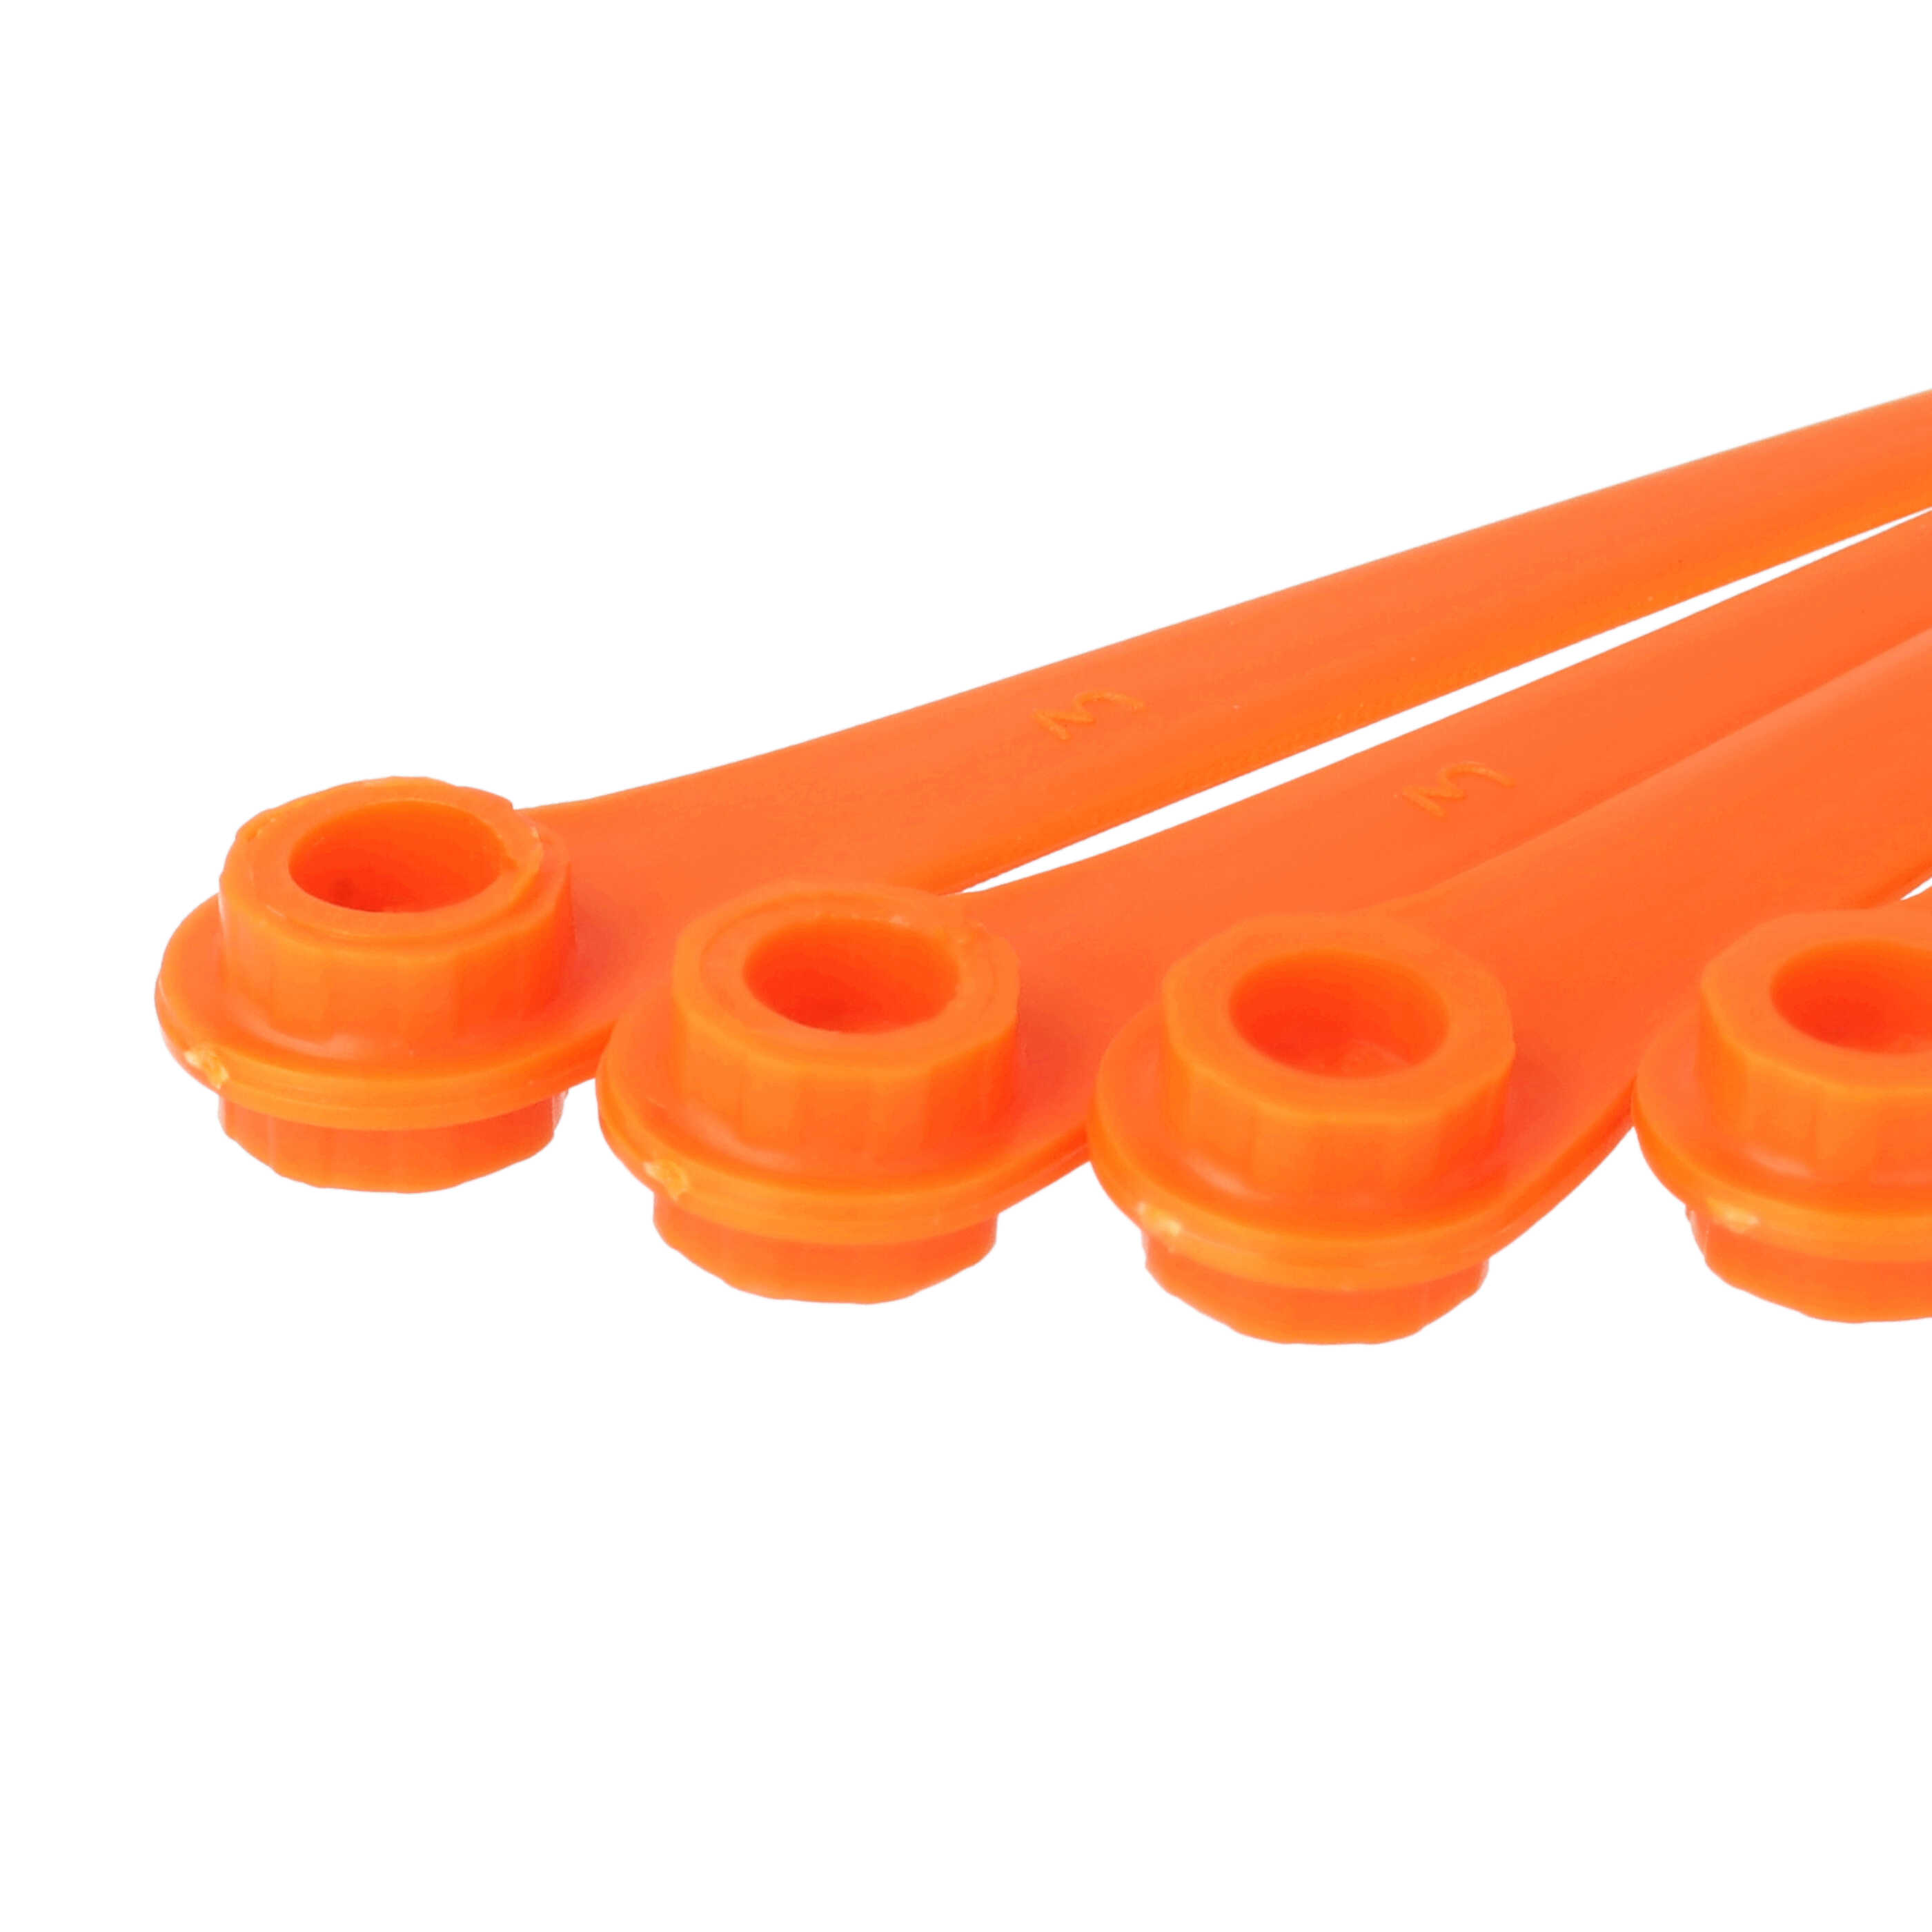 10x Lama sostituisce Gardena RotorCut 5368-20 per tagliaerba - arancione, plastica